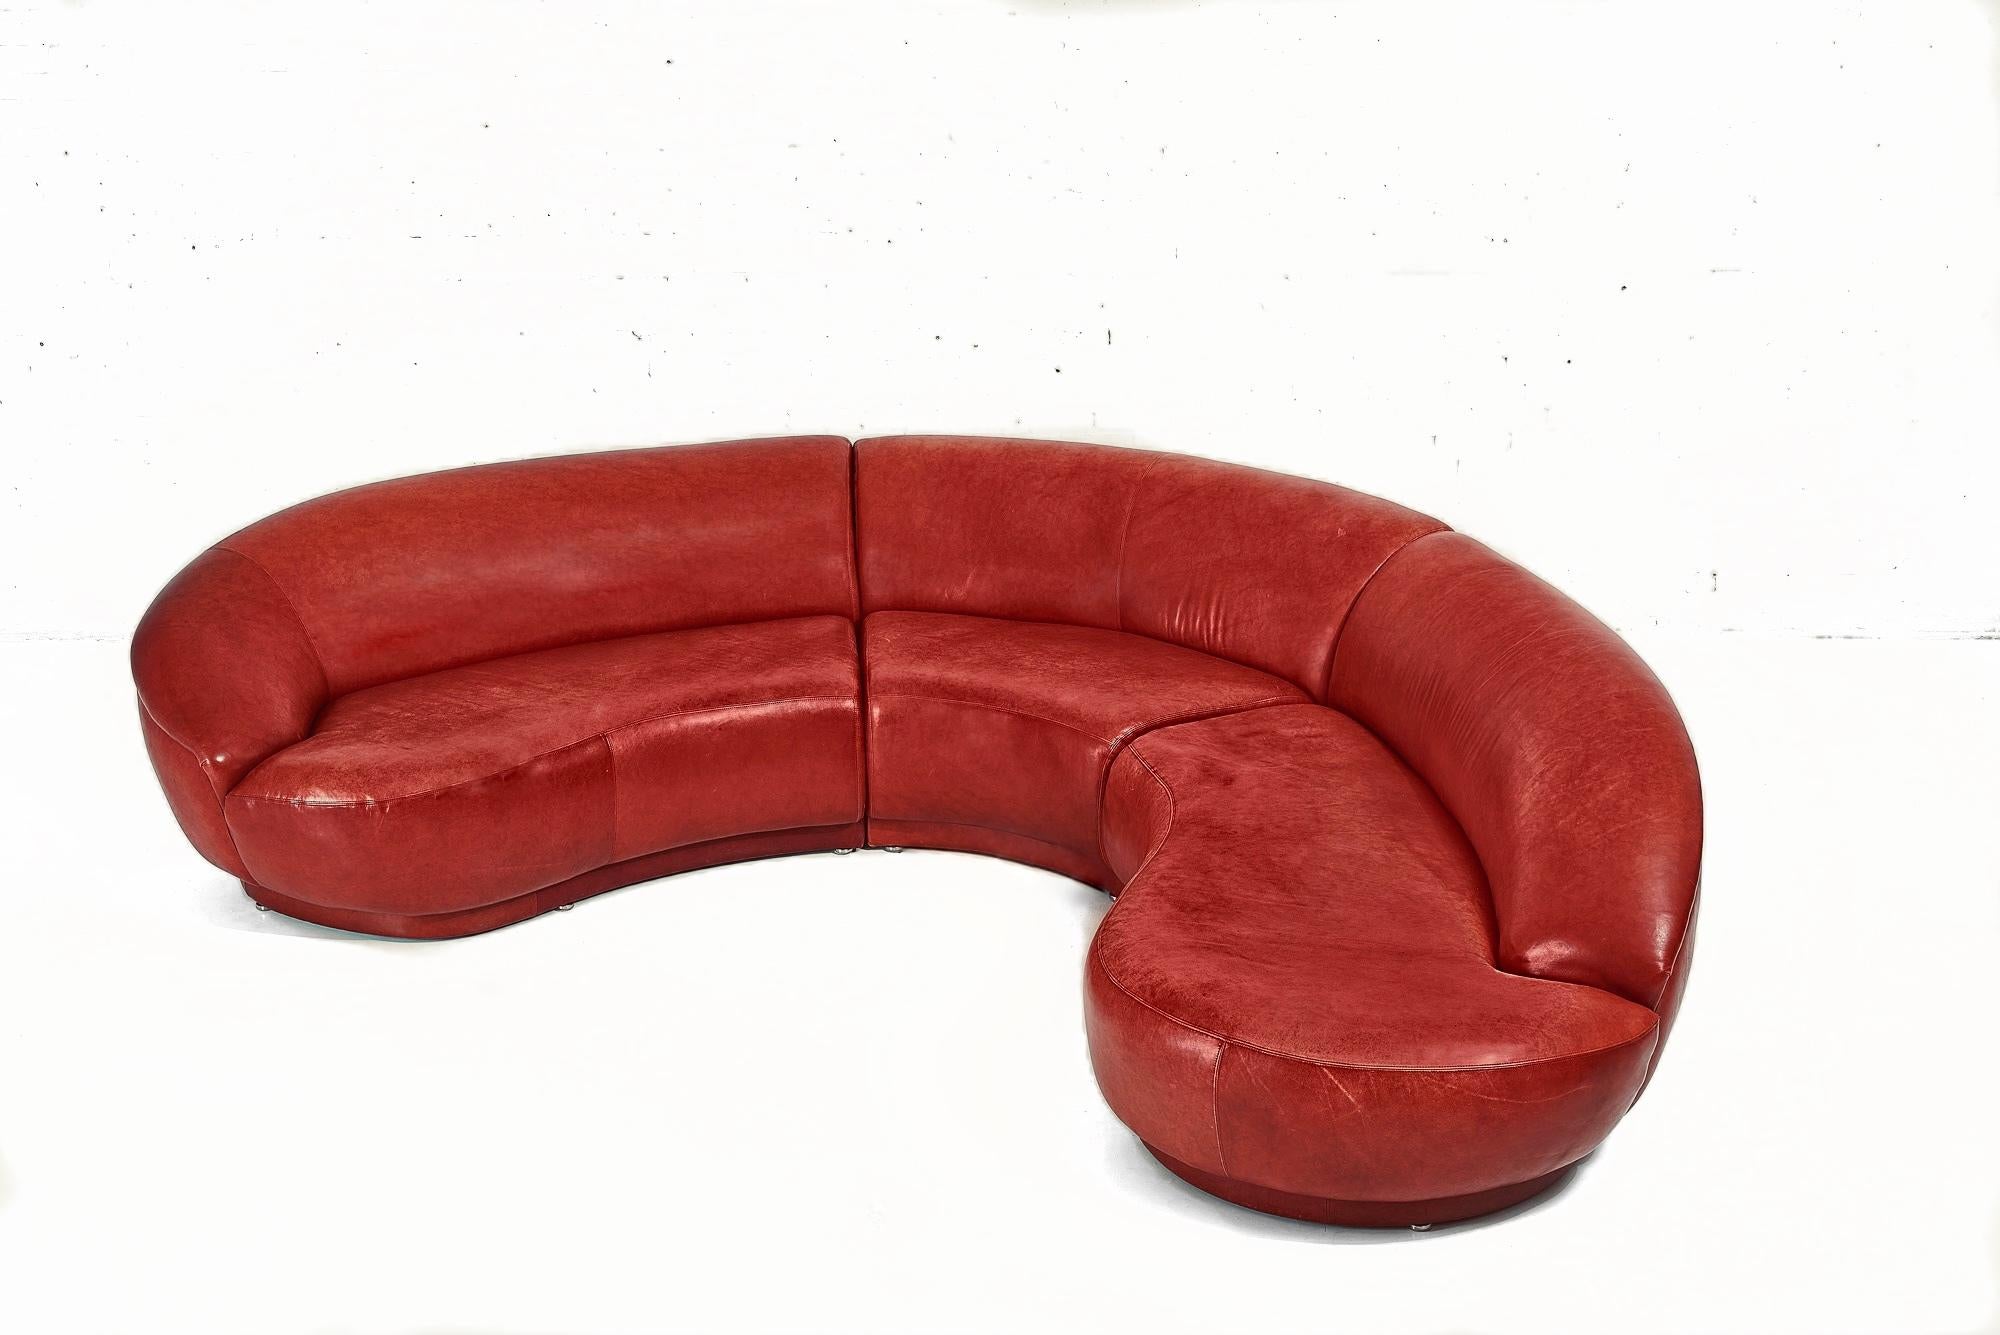 Thayer Coggin Milo Baughman biomorphic sectional sofa. Made by Thayer-Coggin, circa 1990. Original red leather

